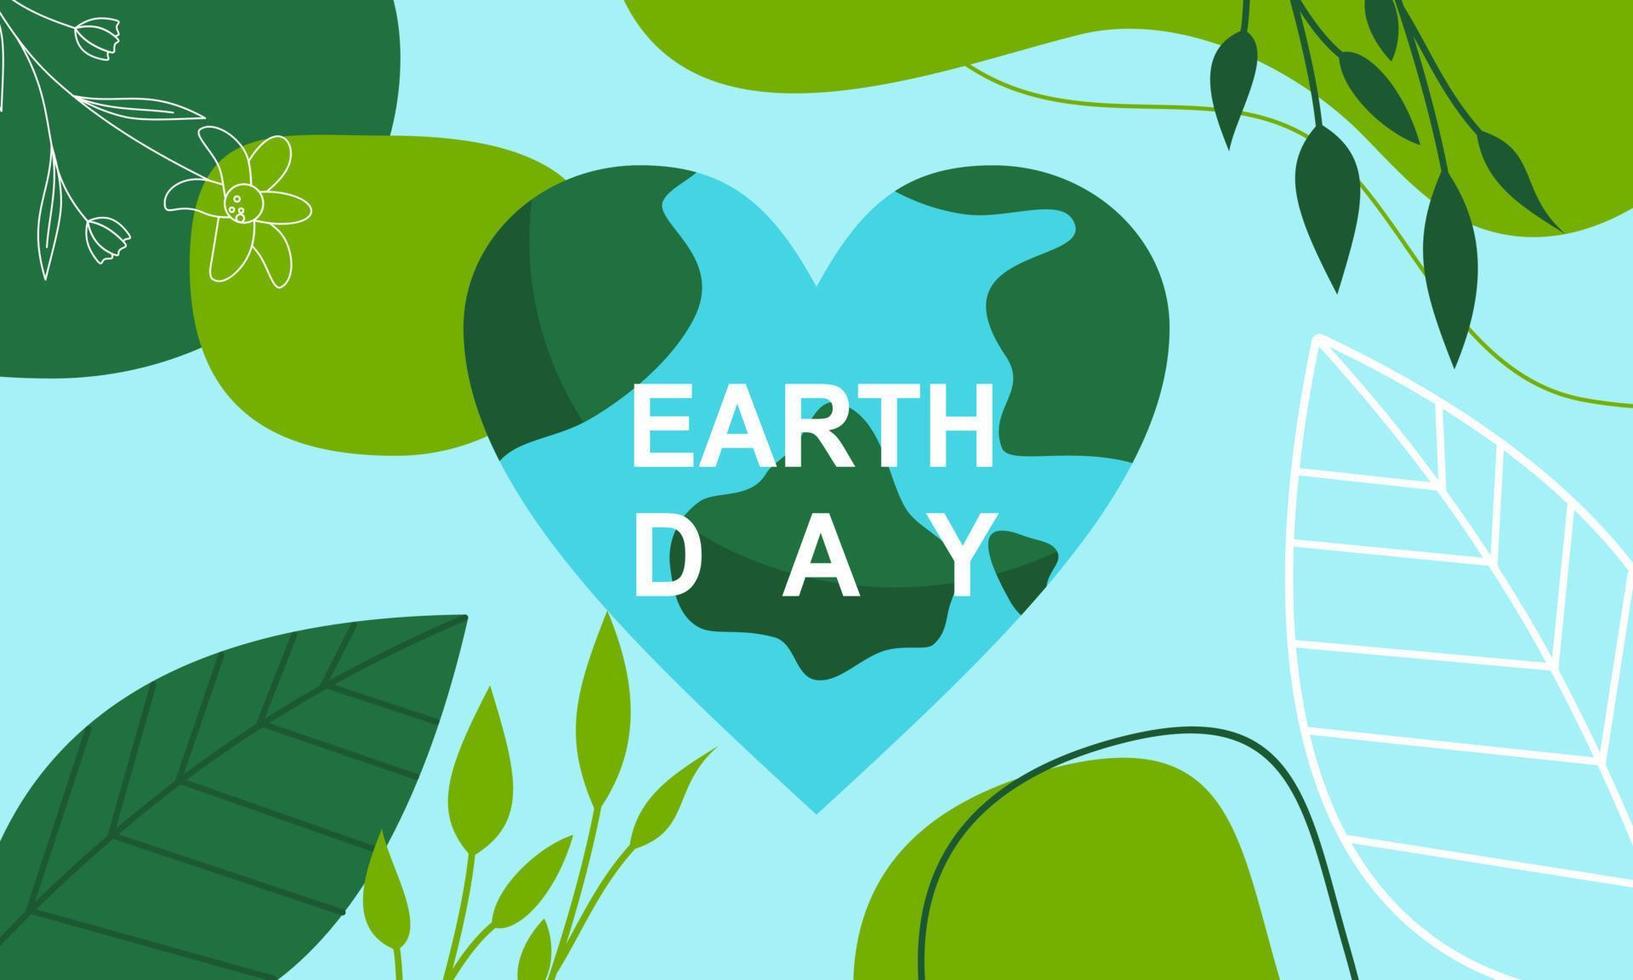 jordens dag affischer med grön bakgrund vektor